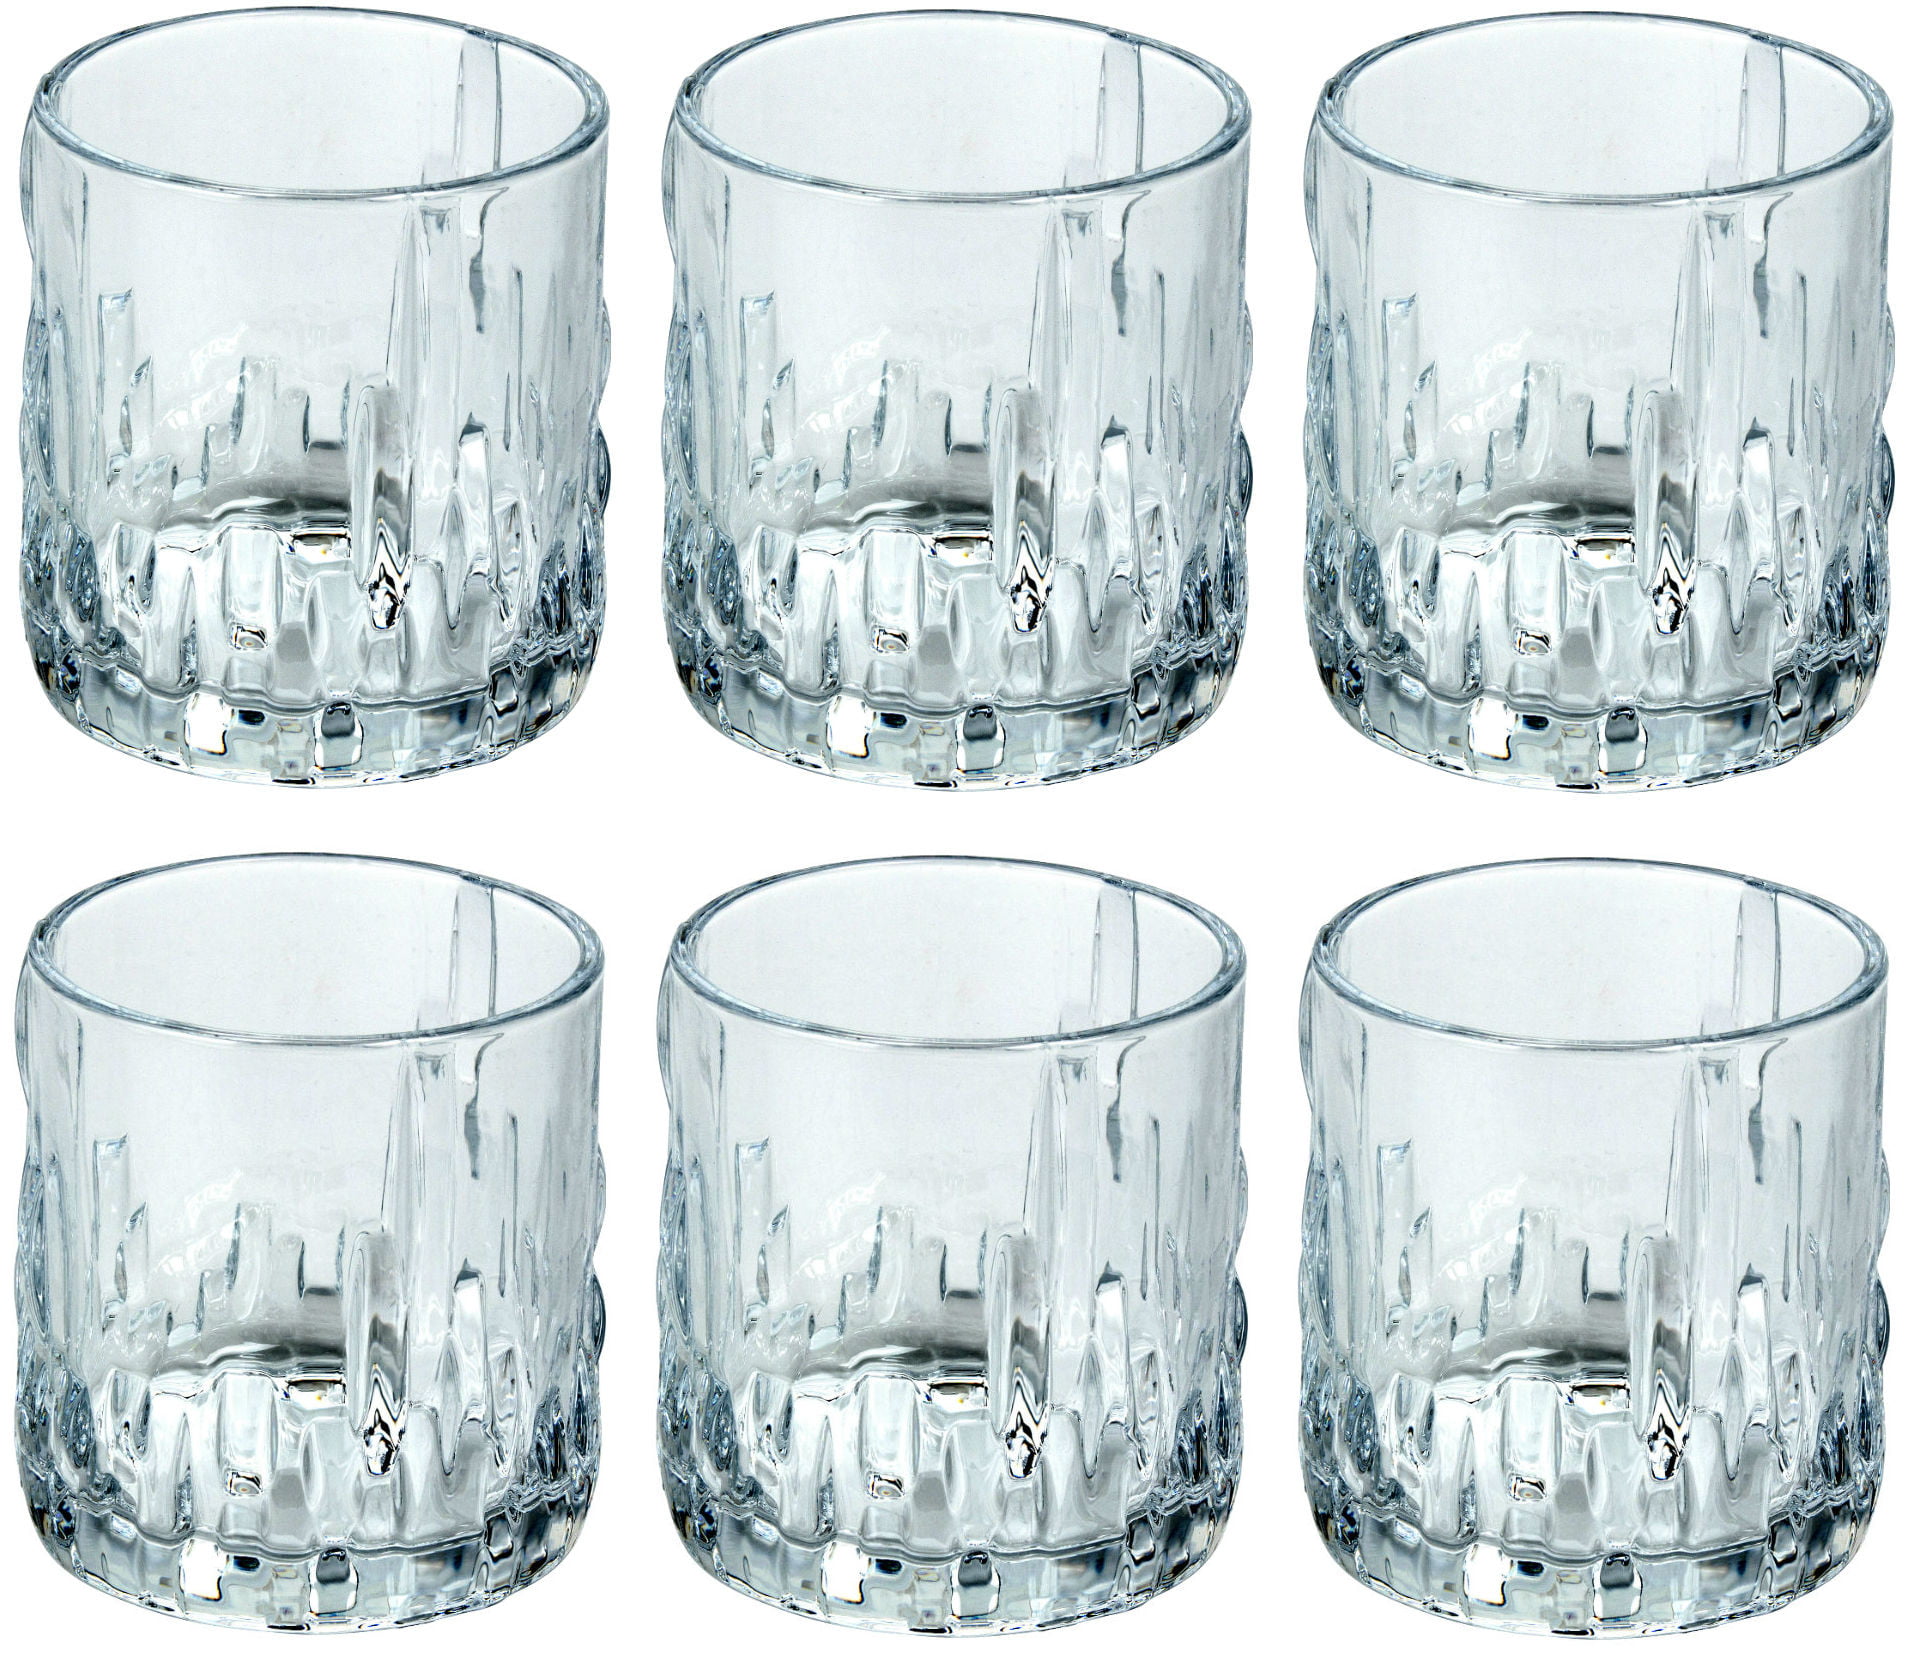 13 Oz Set of 4 Double Old Fashioned Glasses JoyJolt Revere Drinking Glass 